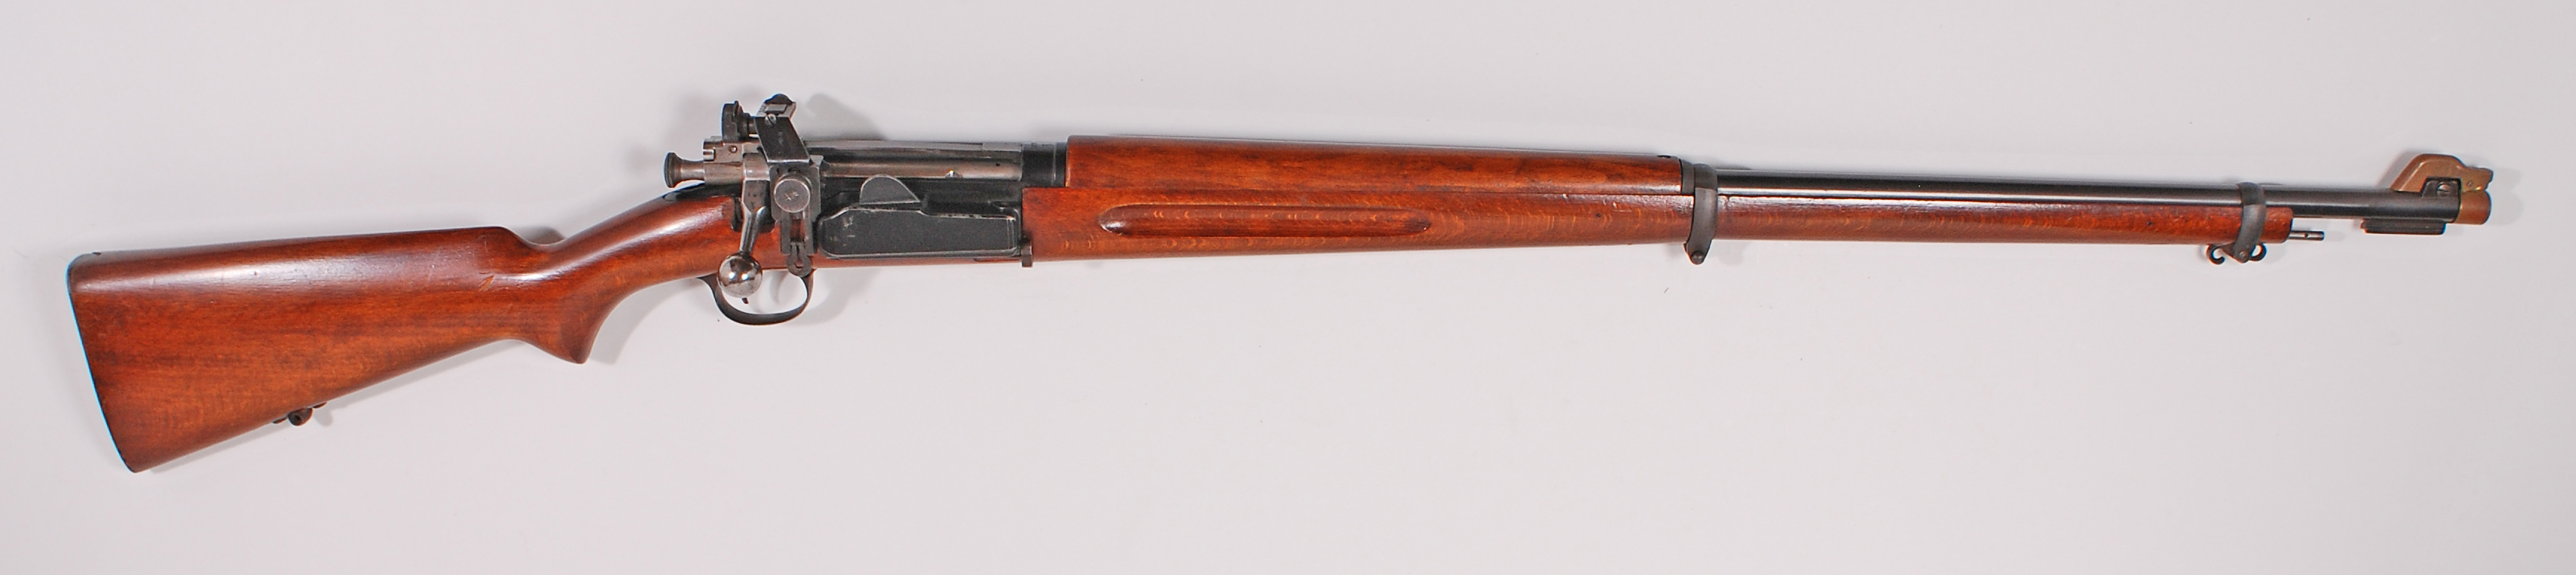 Rifle-Kongsberg-Krag-M1894-1936%20privat